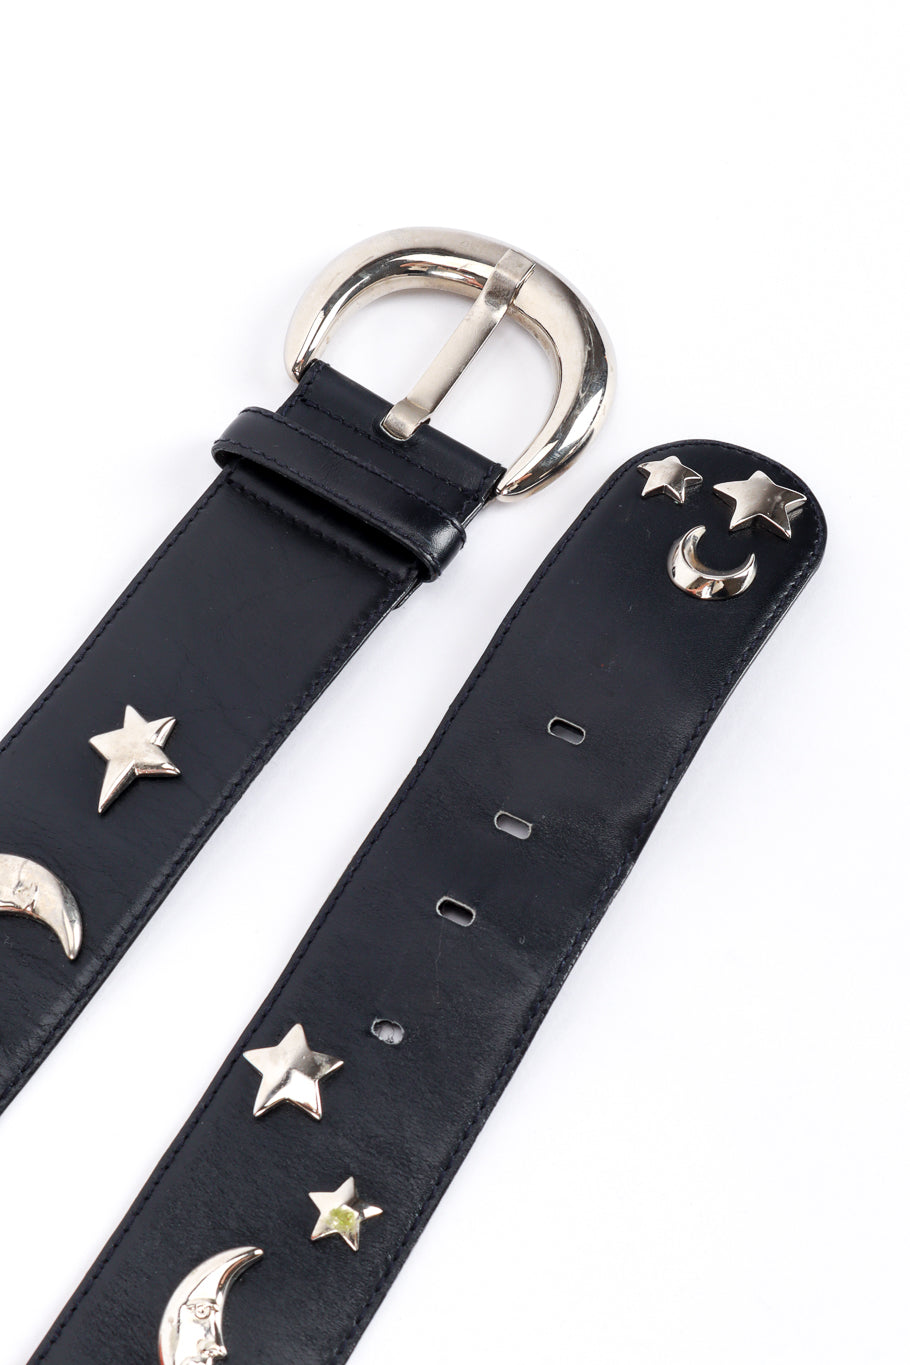 Vintage Escada Moon & Star Studded Belt buckle and end tip @recess la